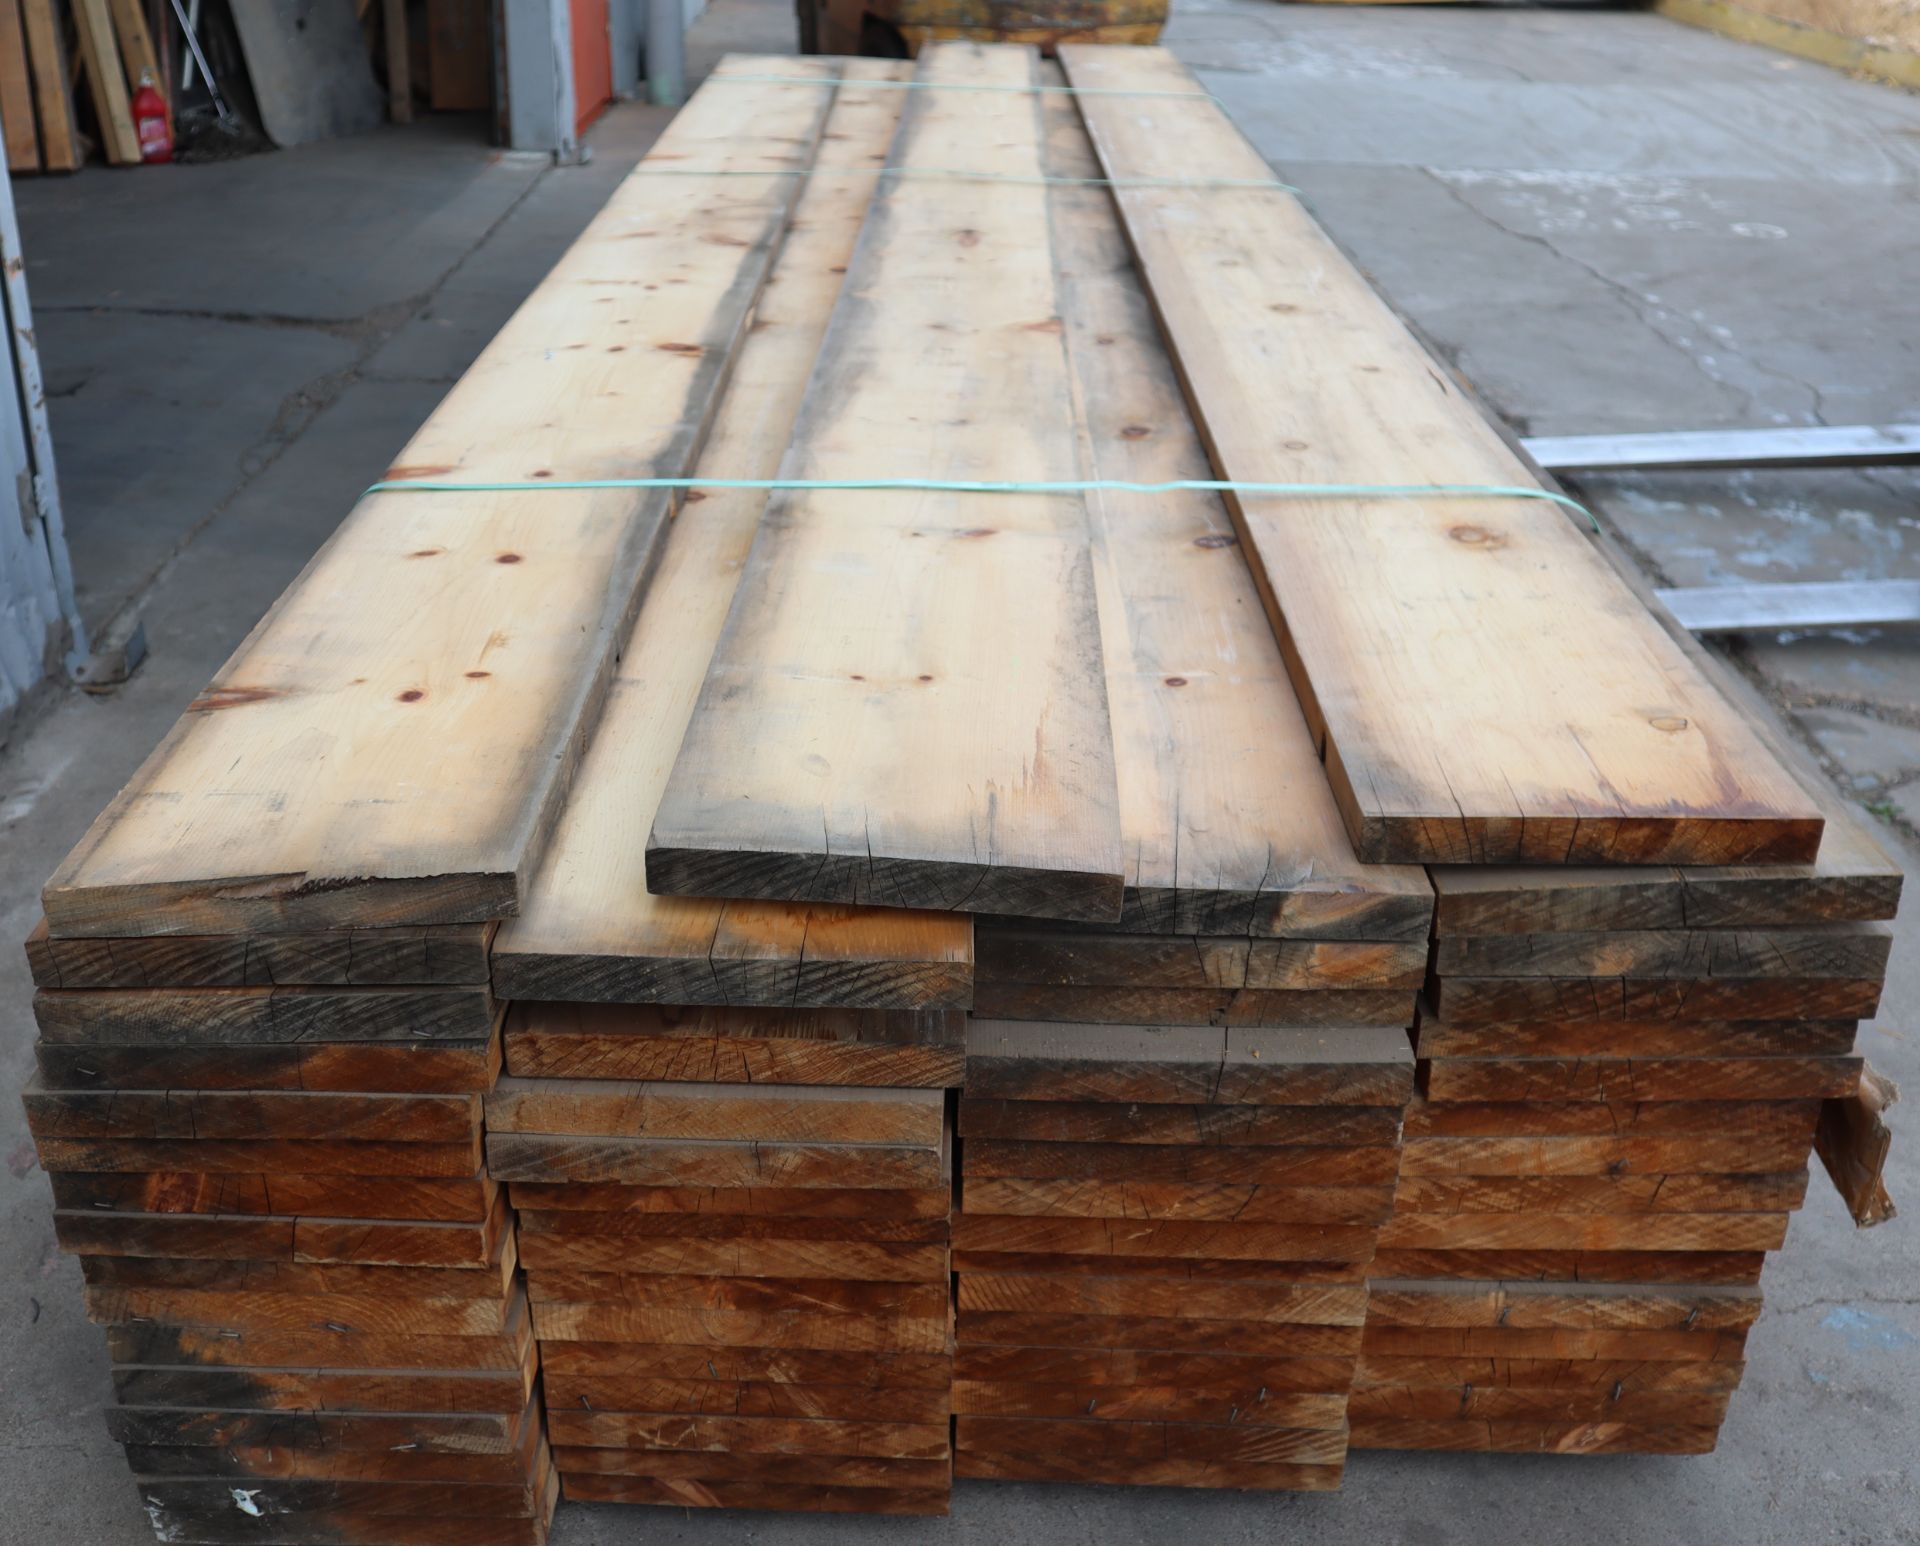 1,102 BFT #2 & Btr Sugar Pine, Kiln Dried, S2S- HV 5/4x12"x14' Long - Image 2 of 5